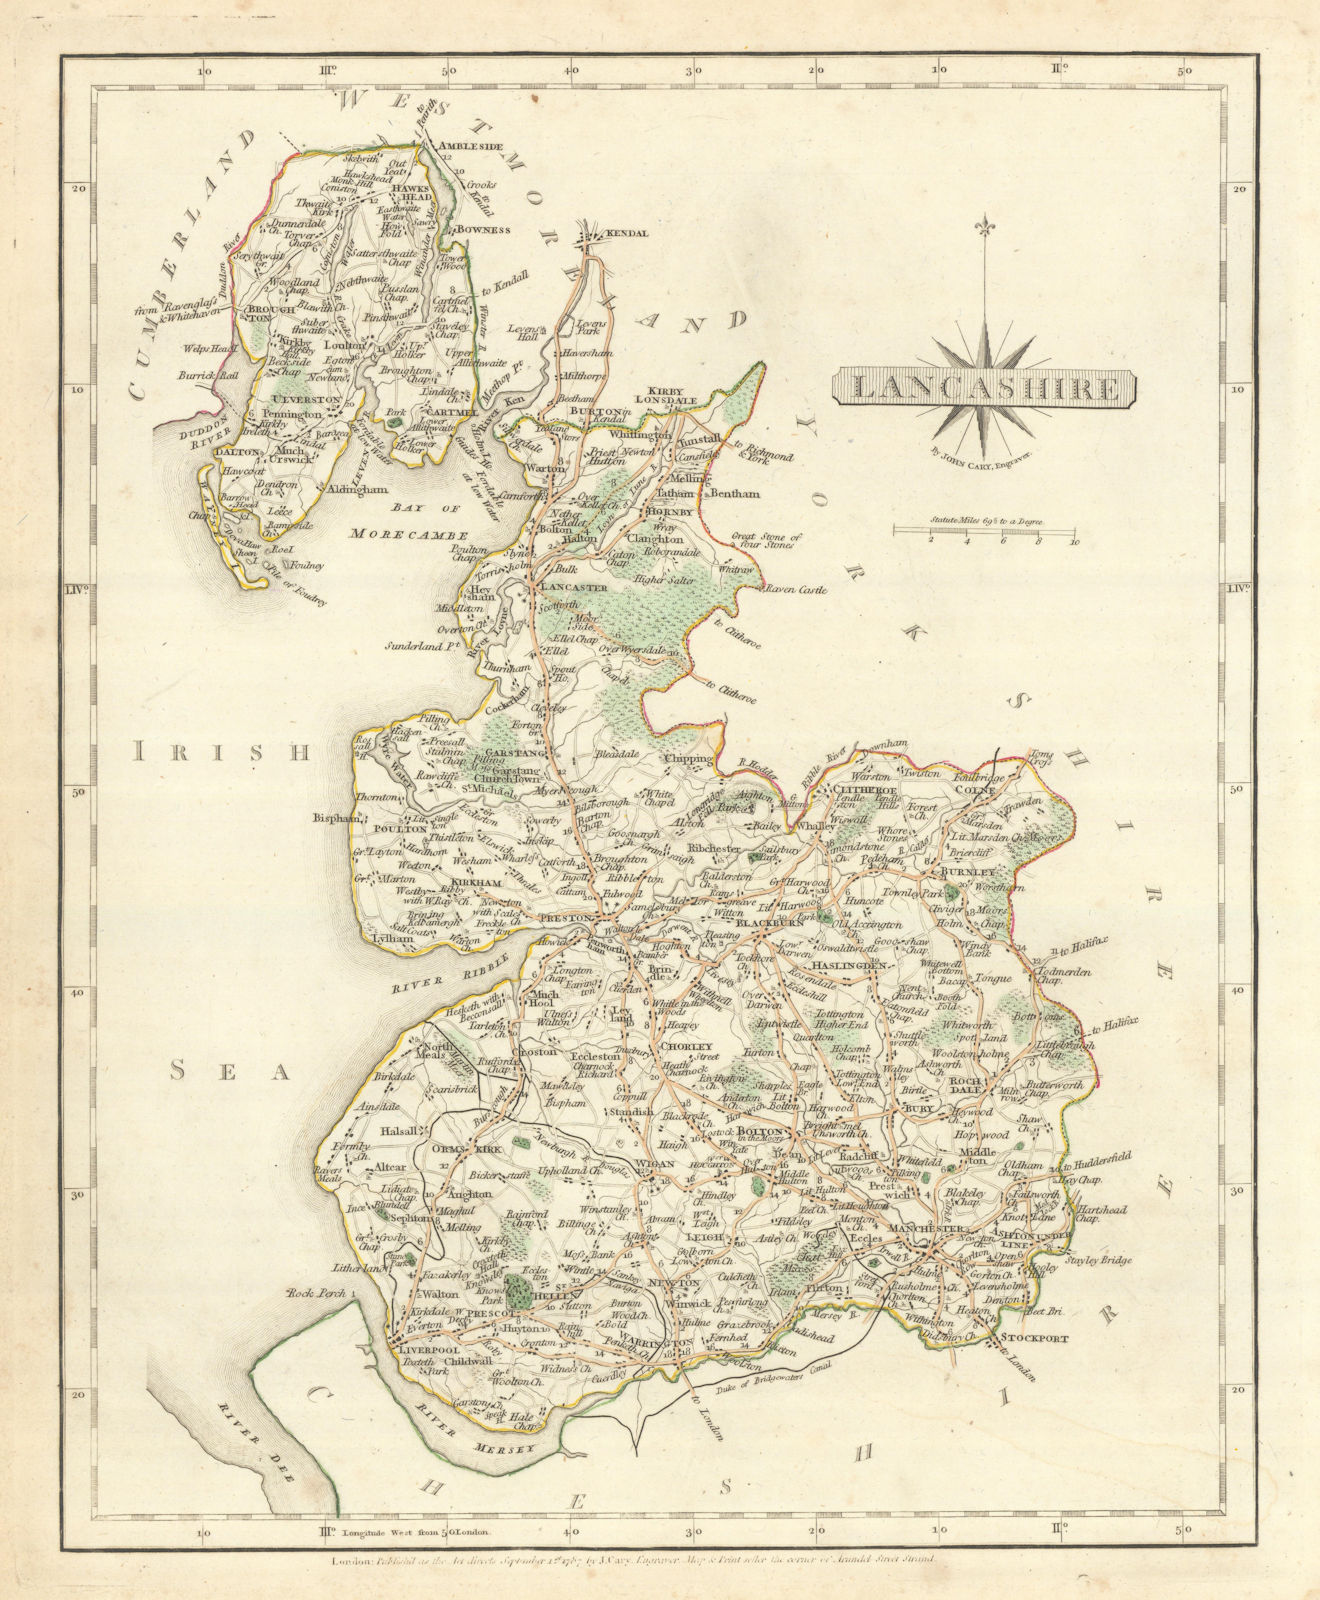 Antique county map of LANCASHIRE by JOHN CARY. Original outline colour 1793